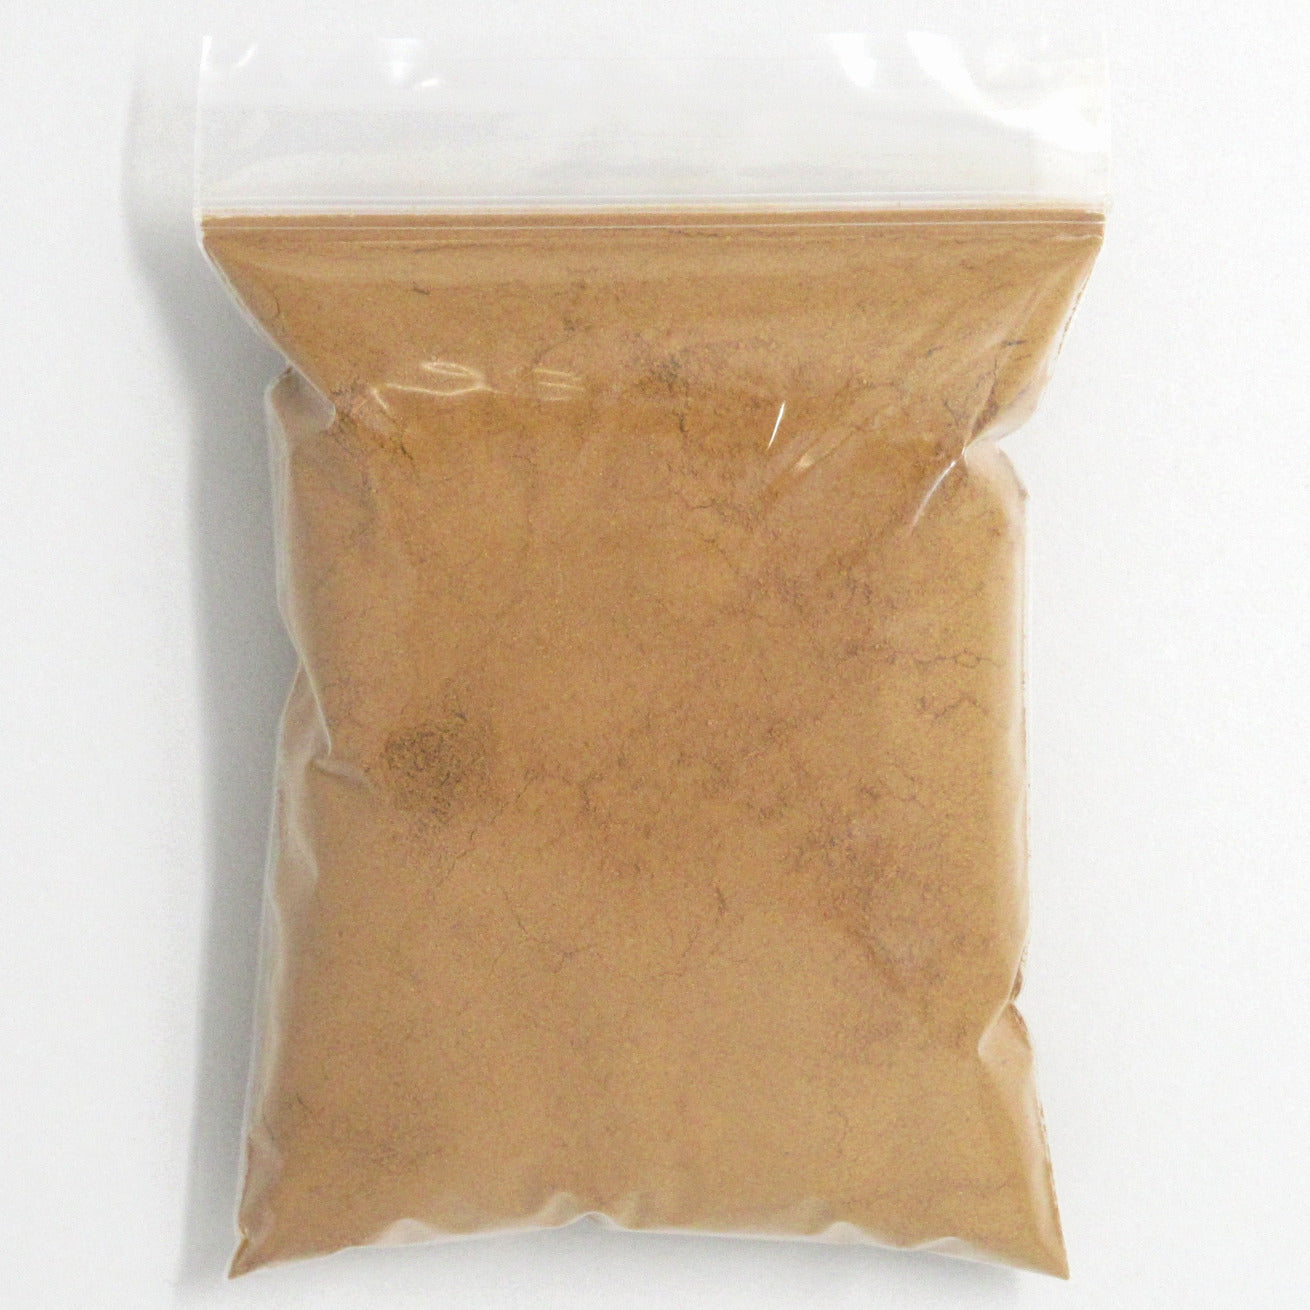 Flour Barrel product image - Cinnamon